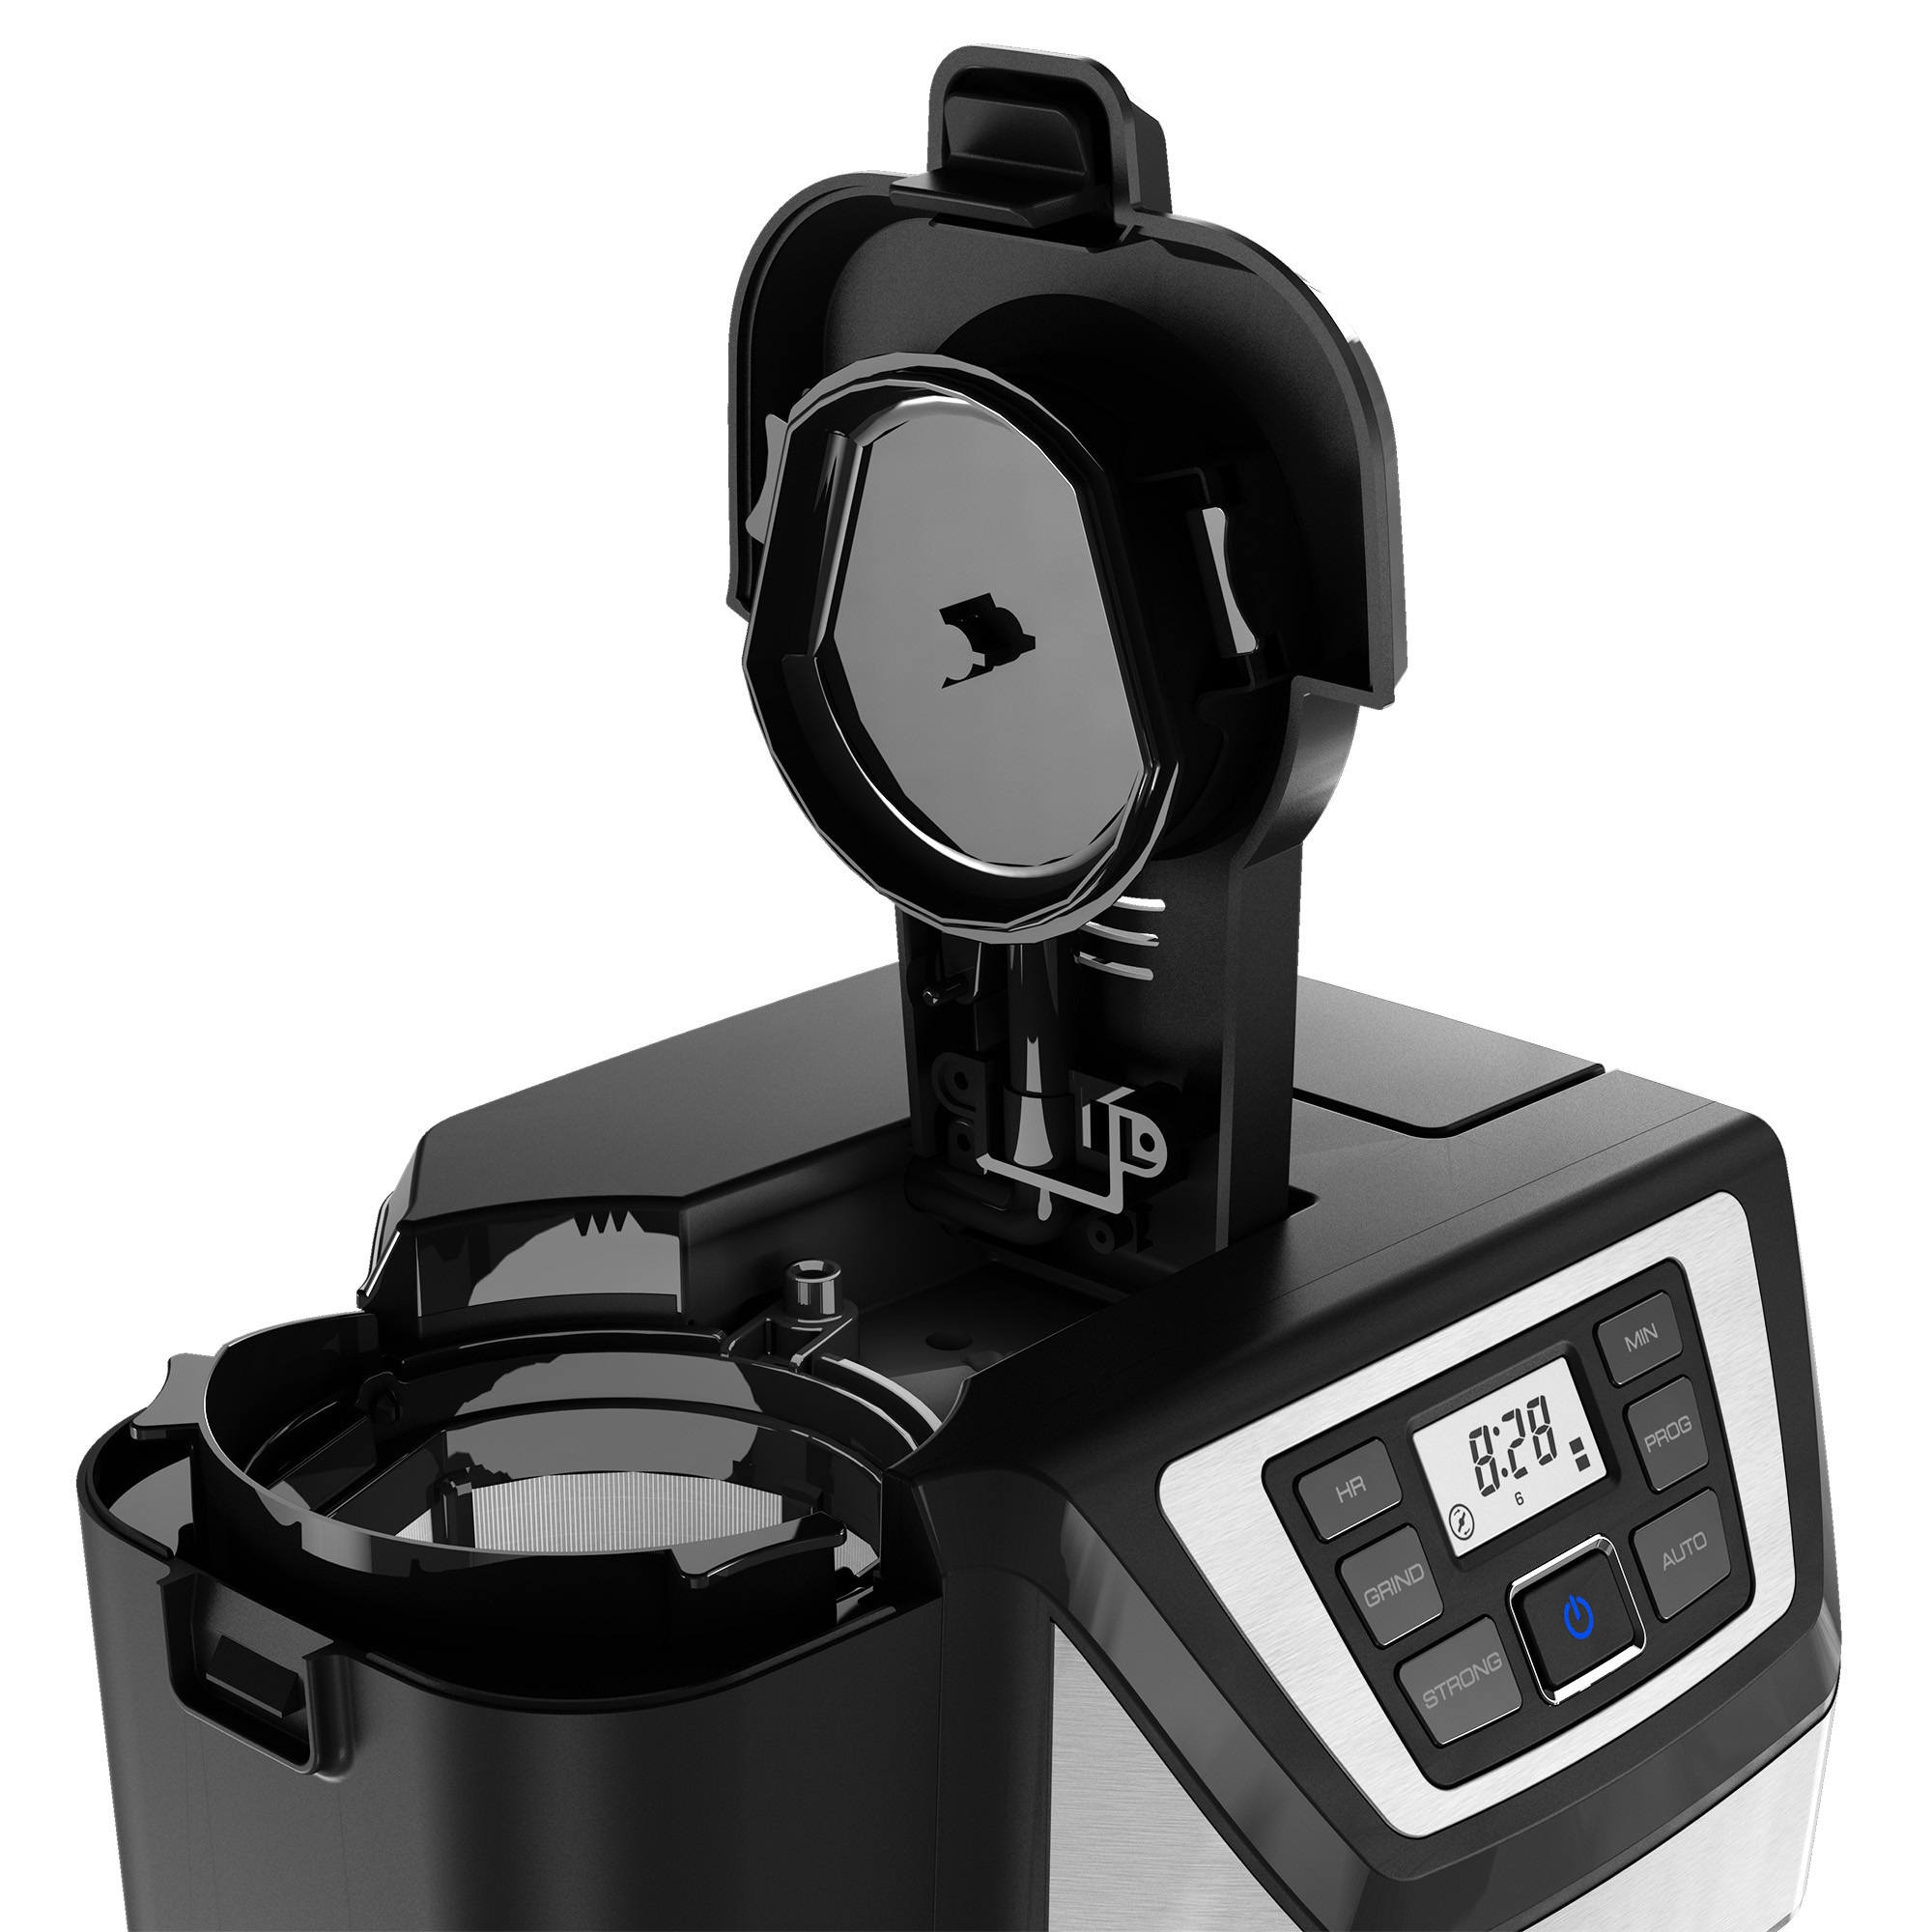 HOW TO FIX Black + Decker 12 Cup Mill & Brew Coffee Maker CM5000B